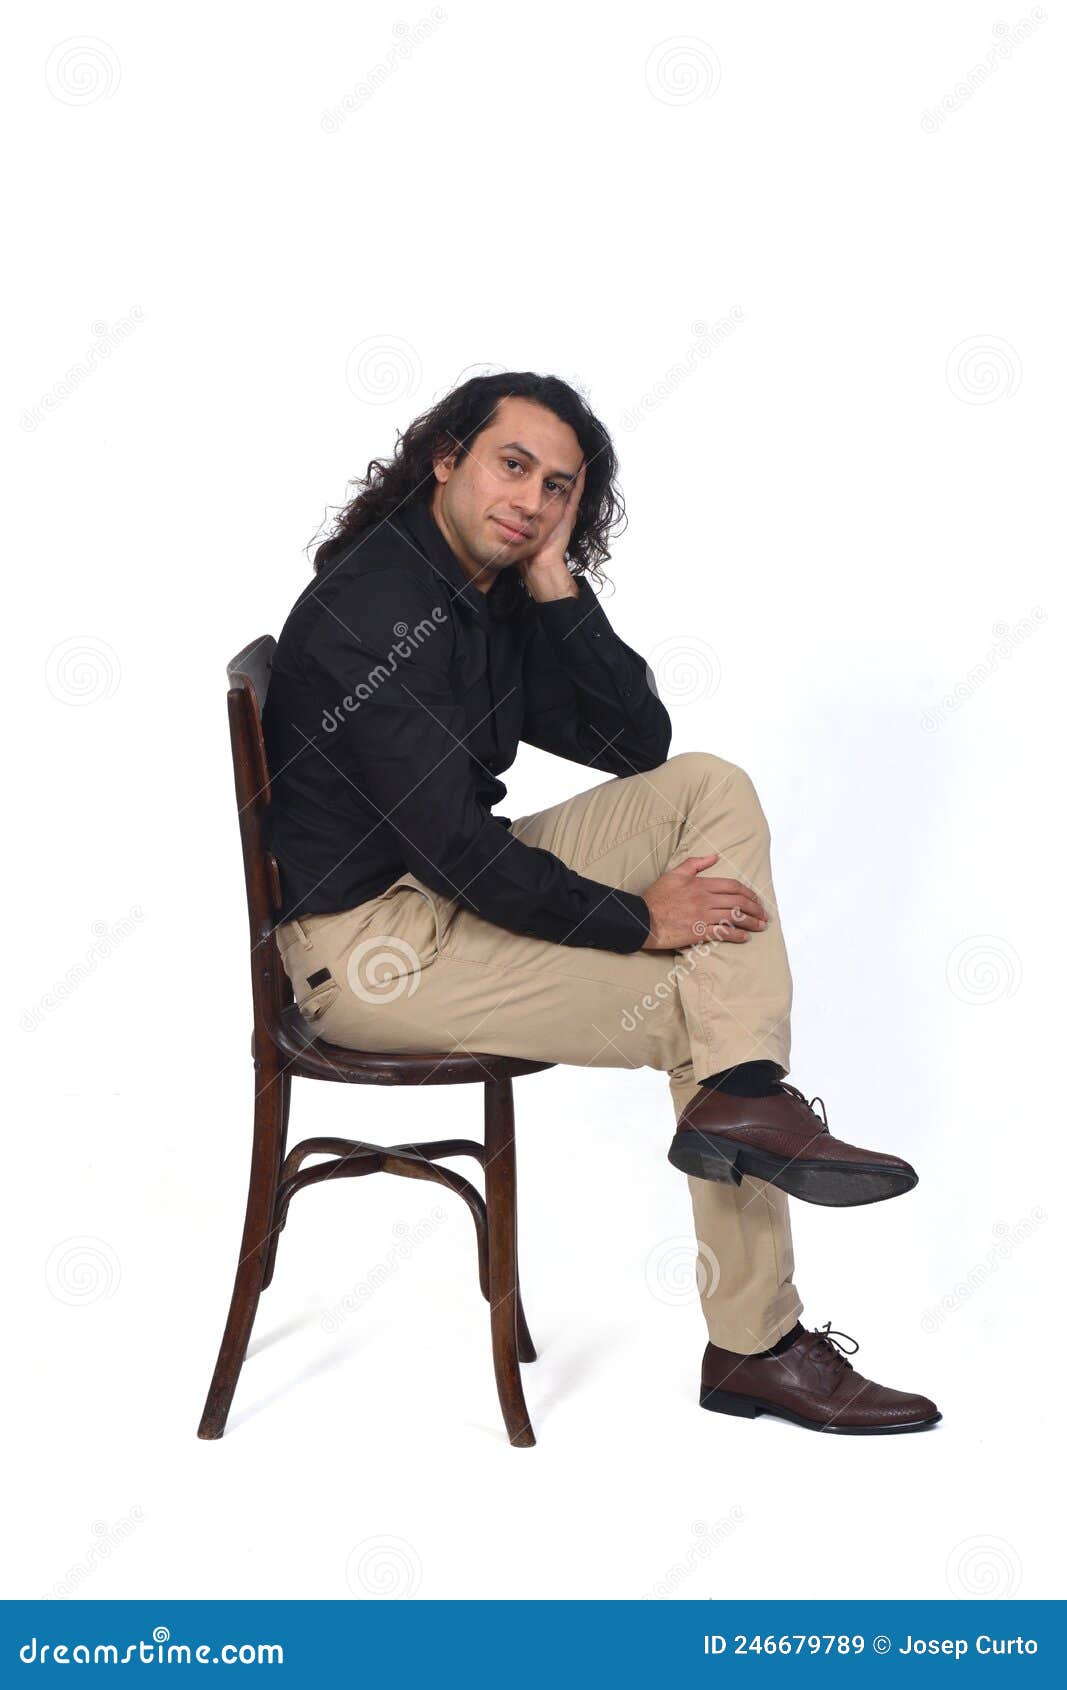 alexander adu gyamfi add photo face sitting in pants